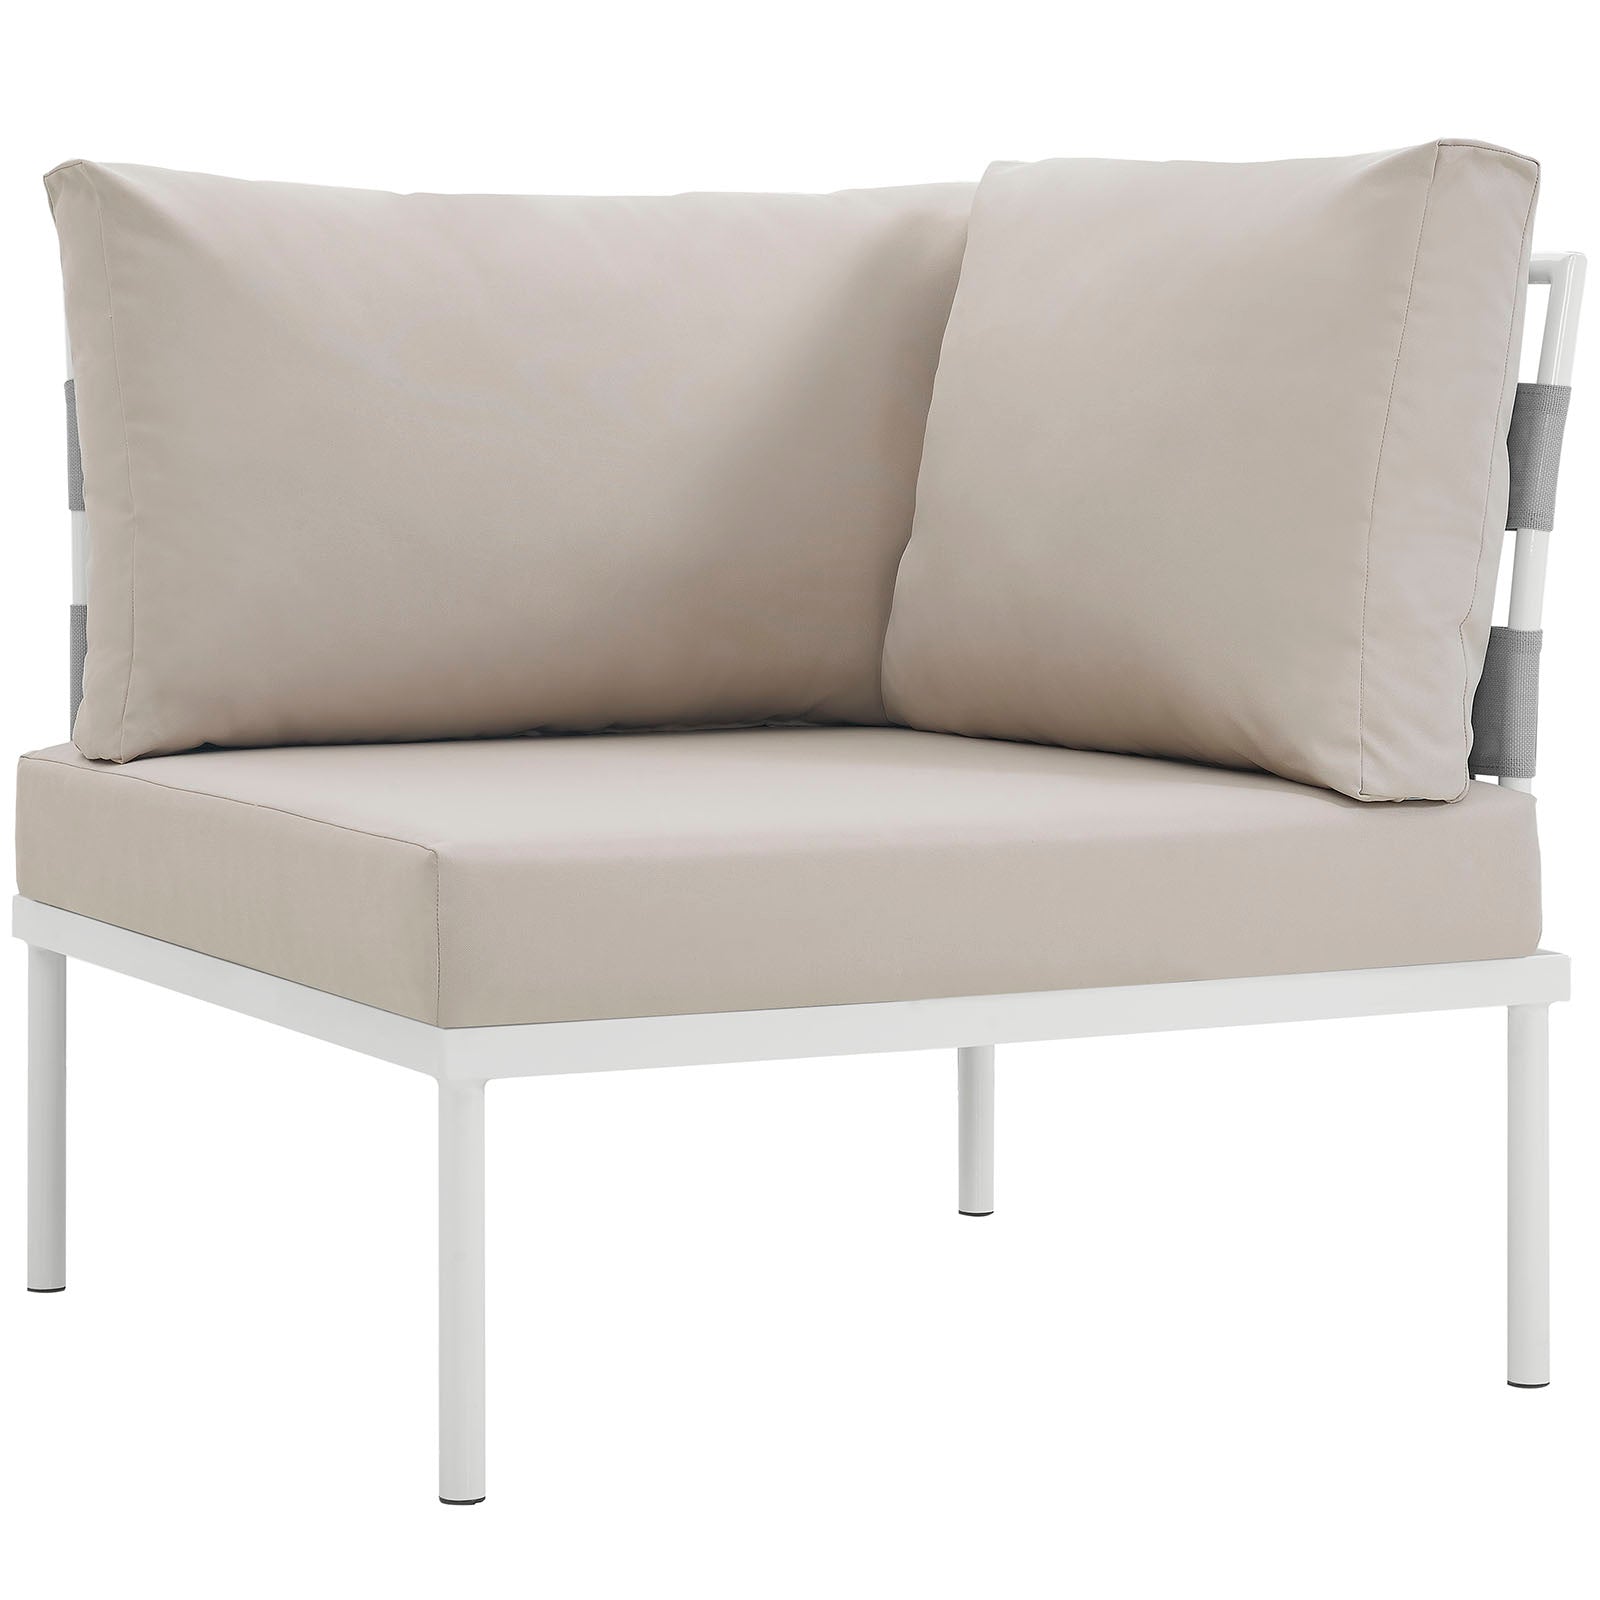 Modway Outdoor Chairs - Harmony Outdoor Patio Aluminum Corner Sofa White Beige